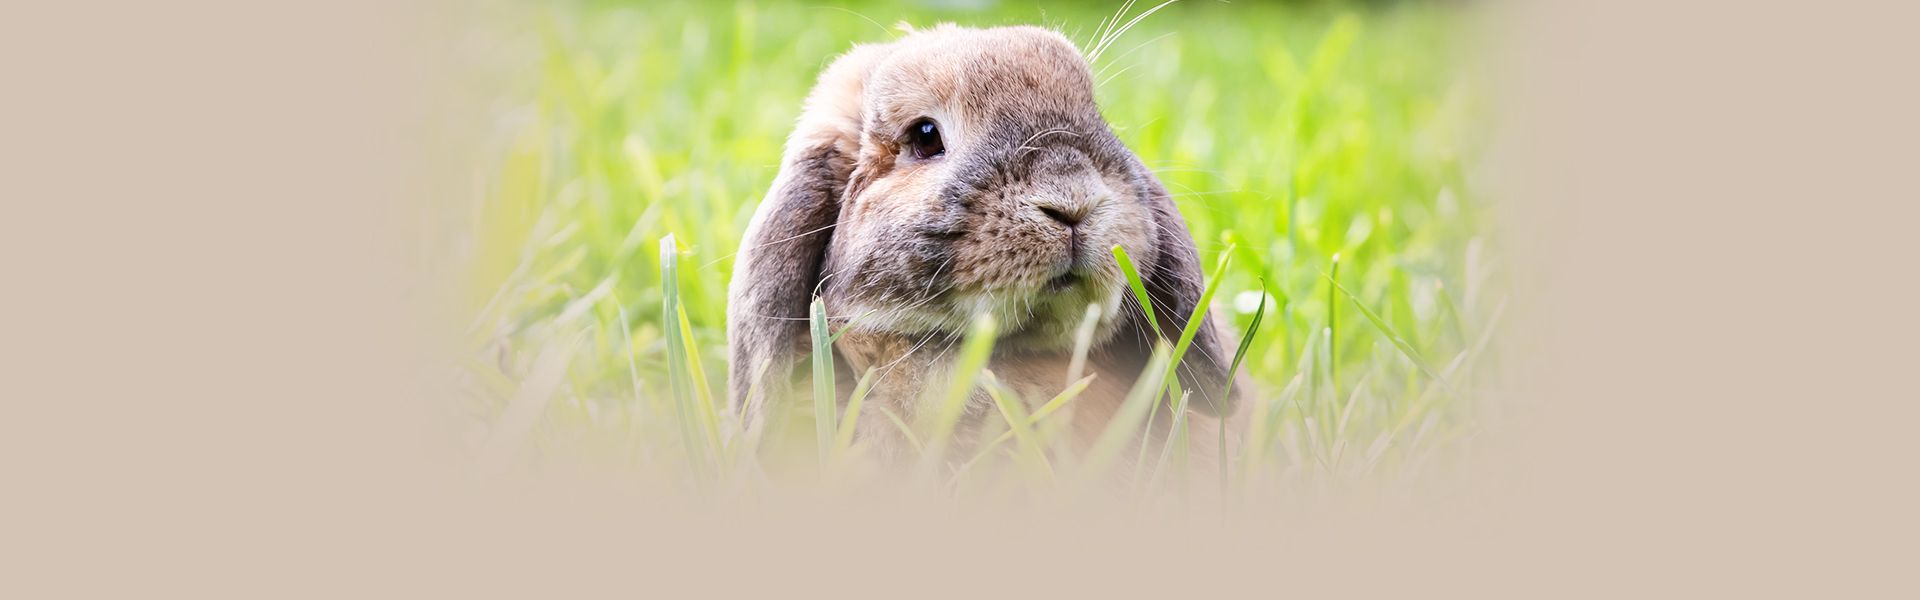 cute rabbit sitting on green grass